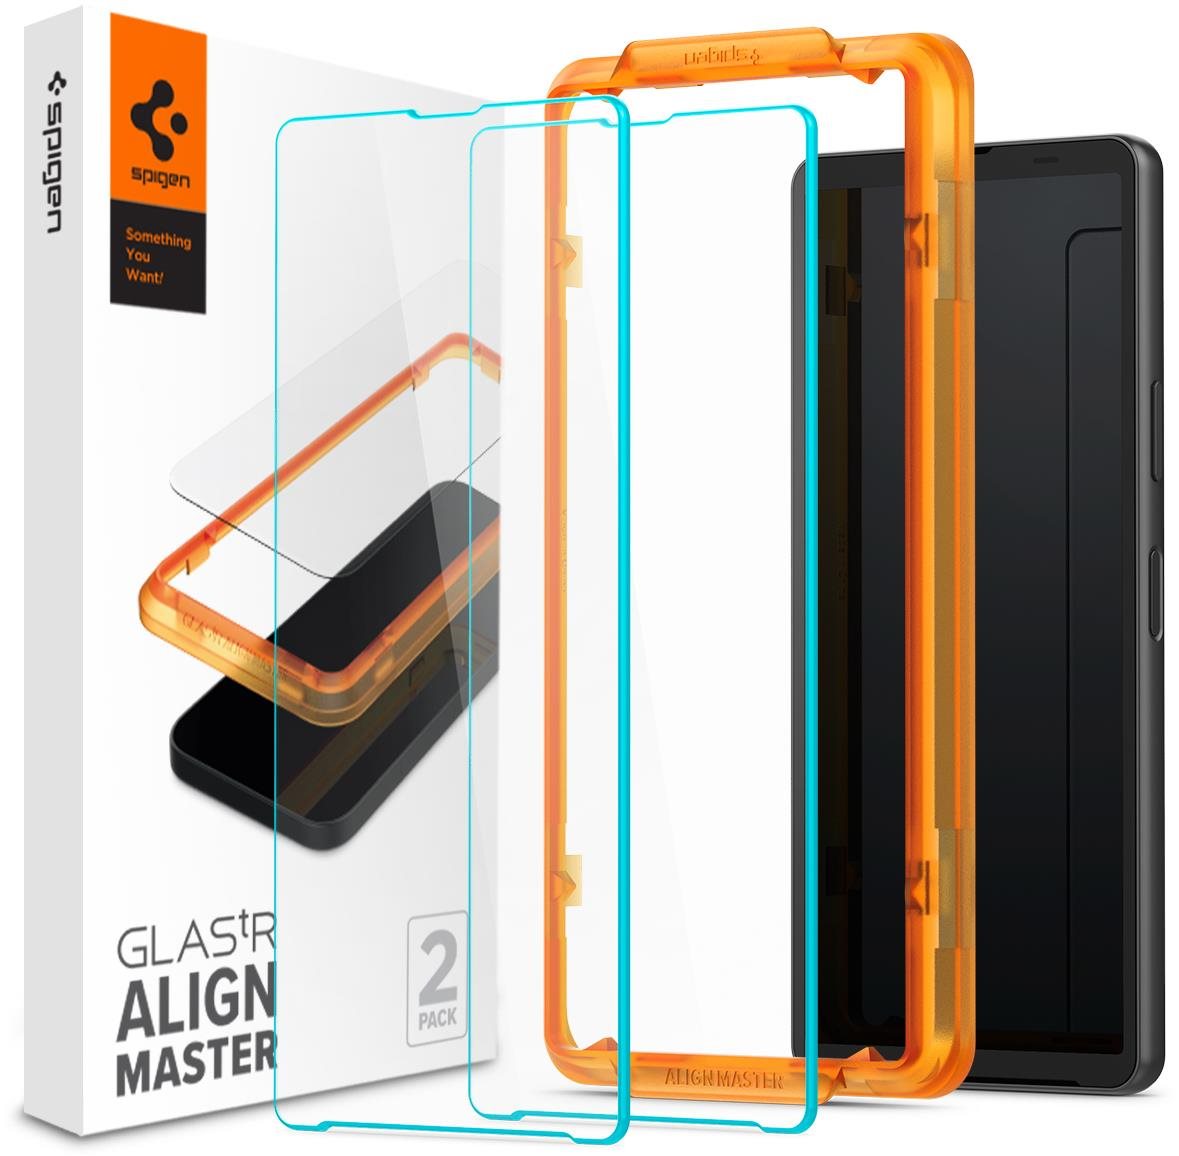 Spigen Glass tR Align Master 2 Pack Sony Xperia 10 V üvegfólia